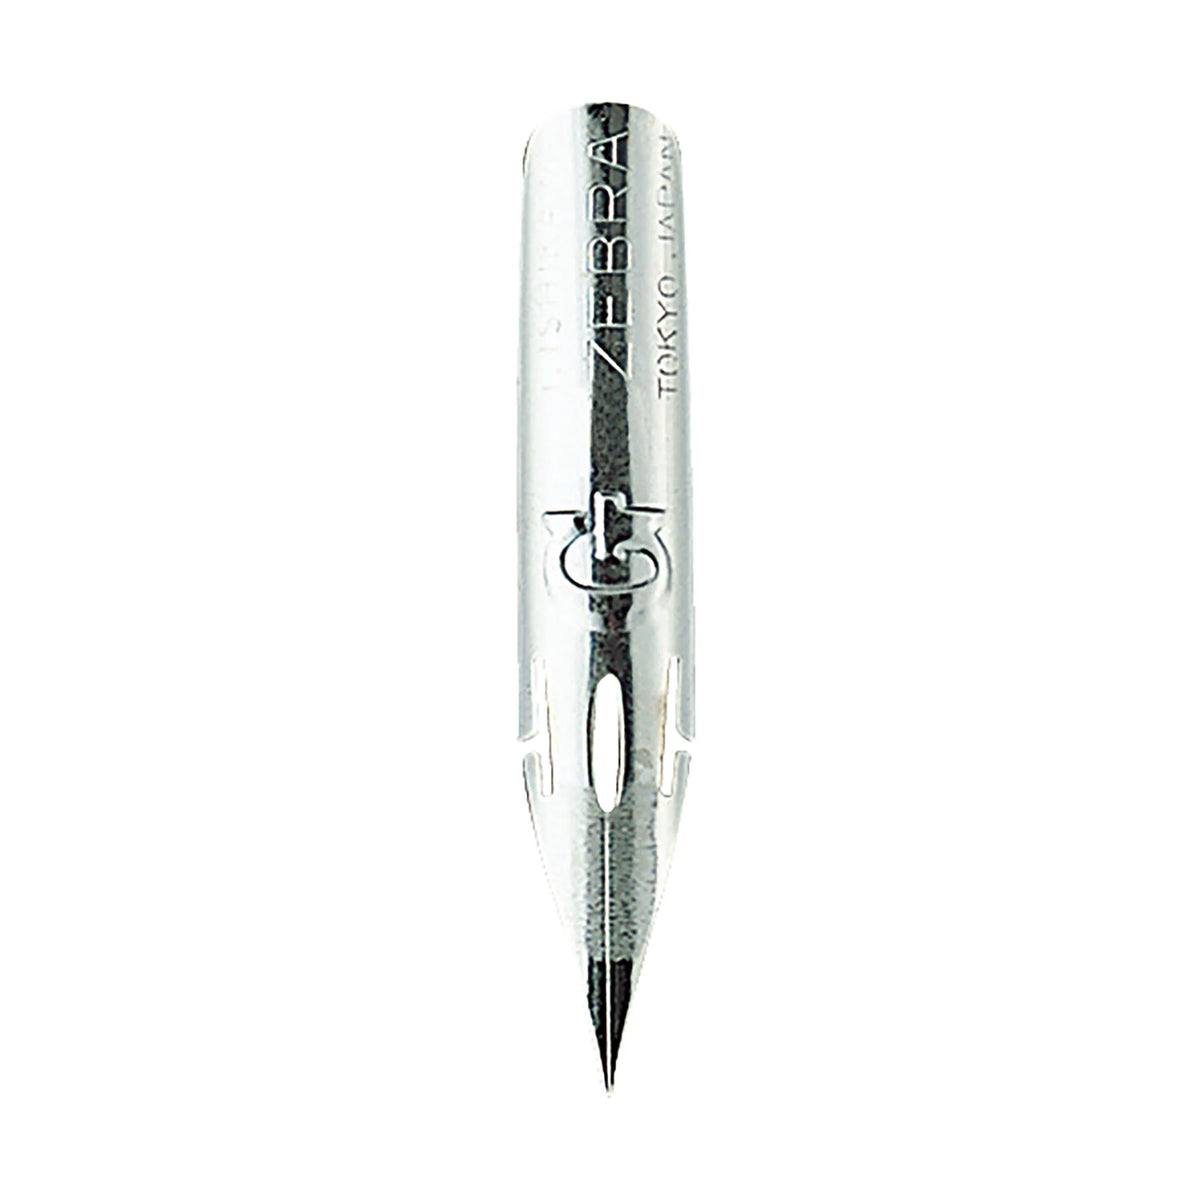 Zebra Zensations Brush Pen Set